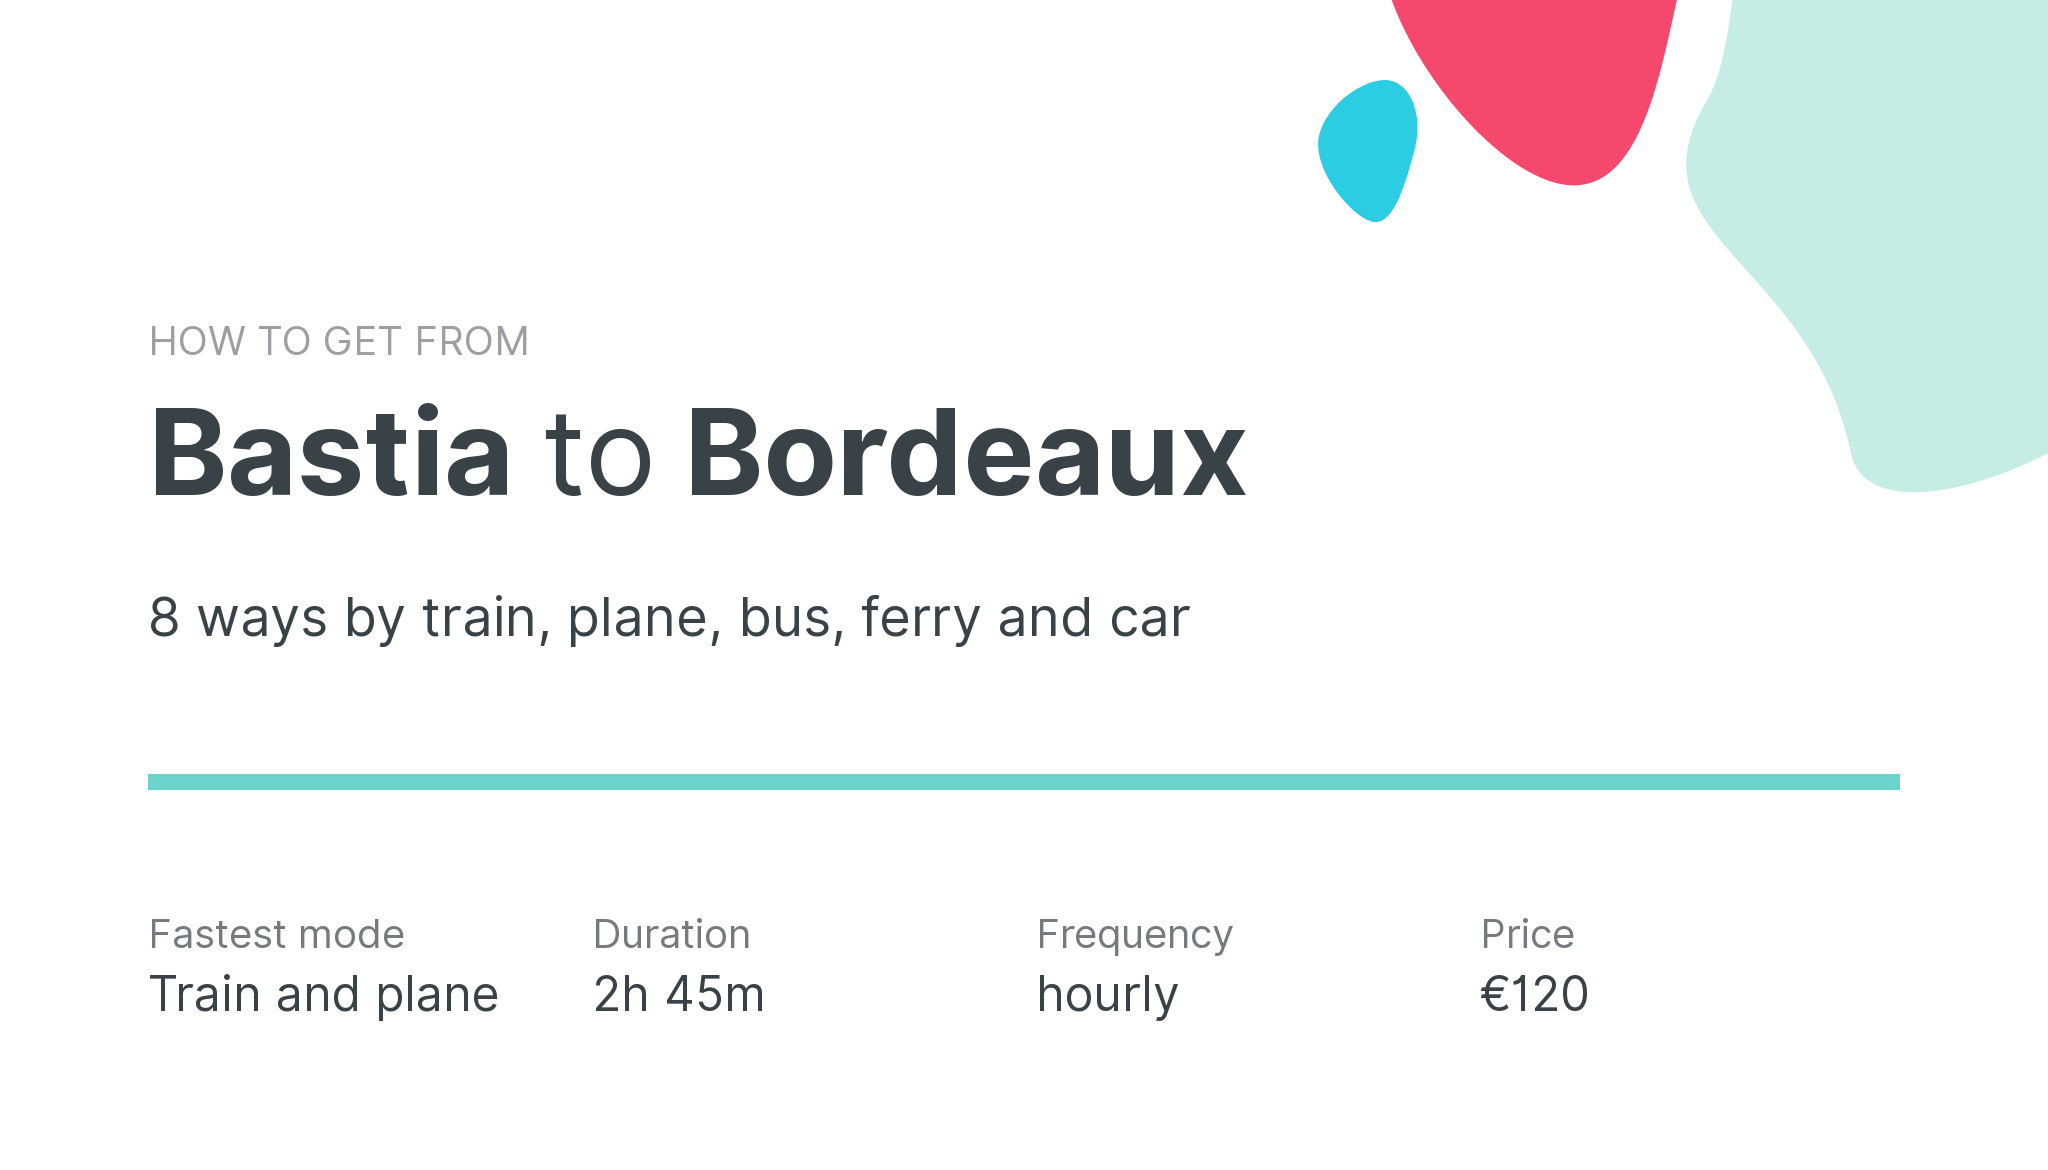 How do I get from Bastia to Bordeaux